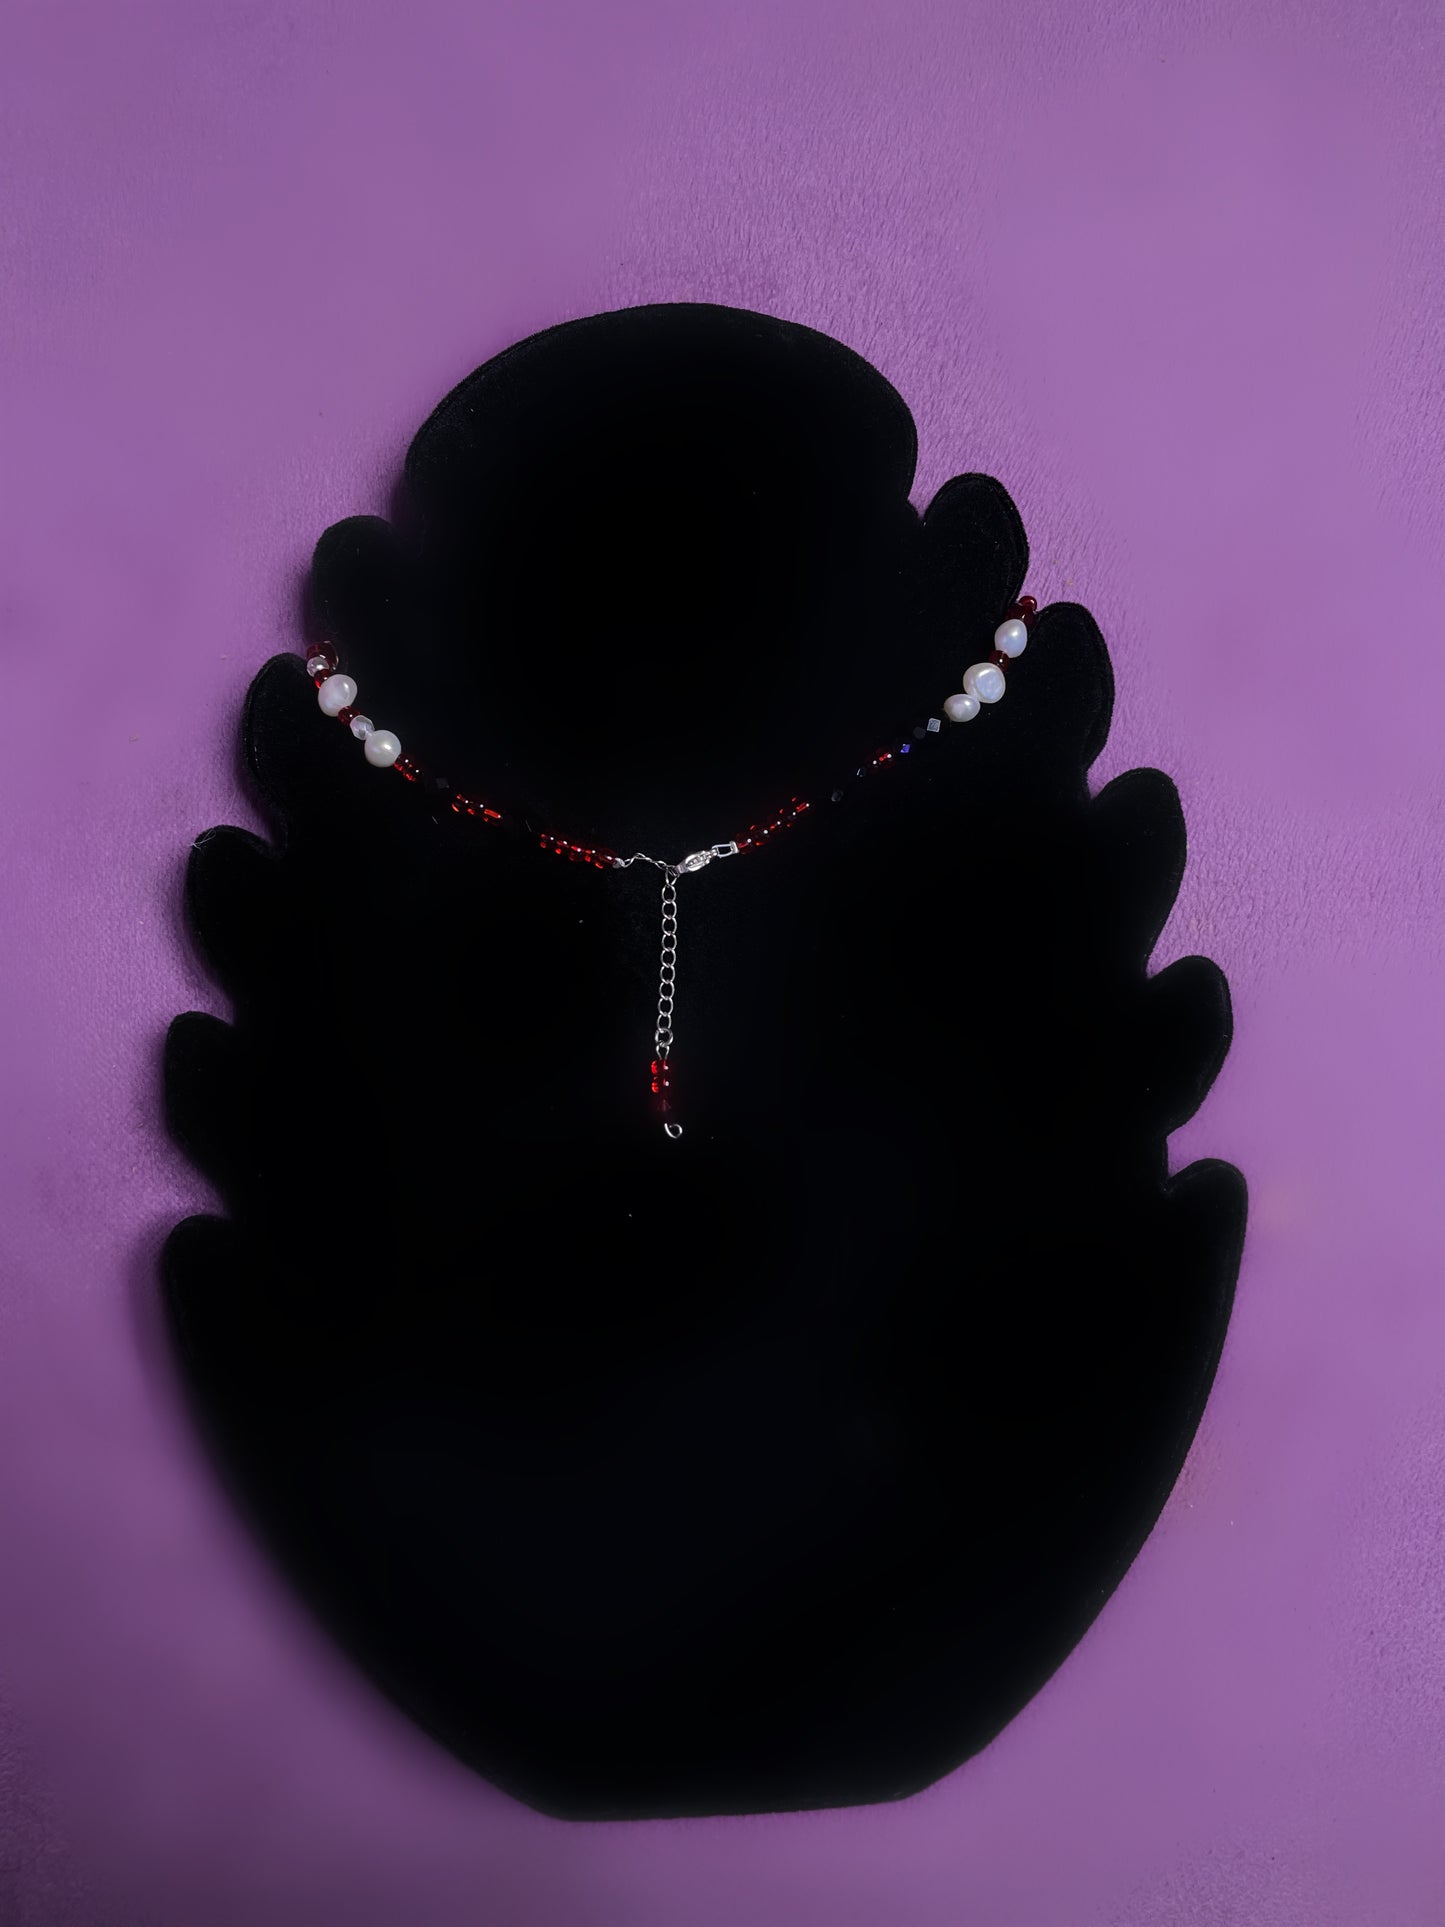 “Pierced” necklace